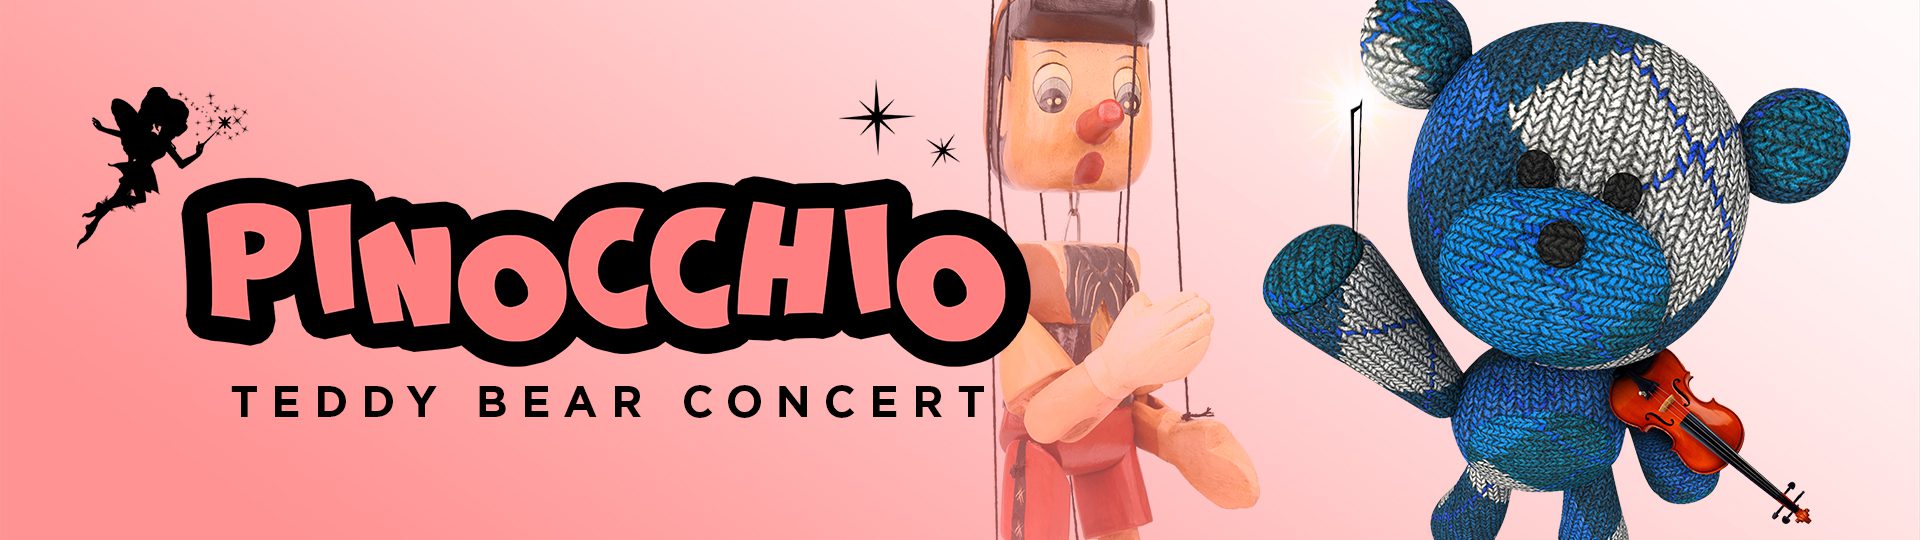 Teddy Bear Concert: Pinocchio